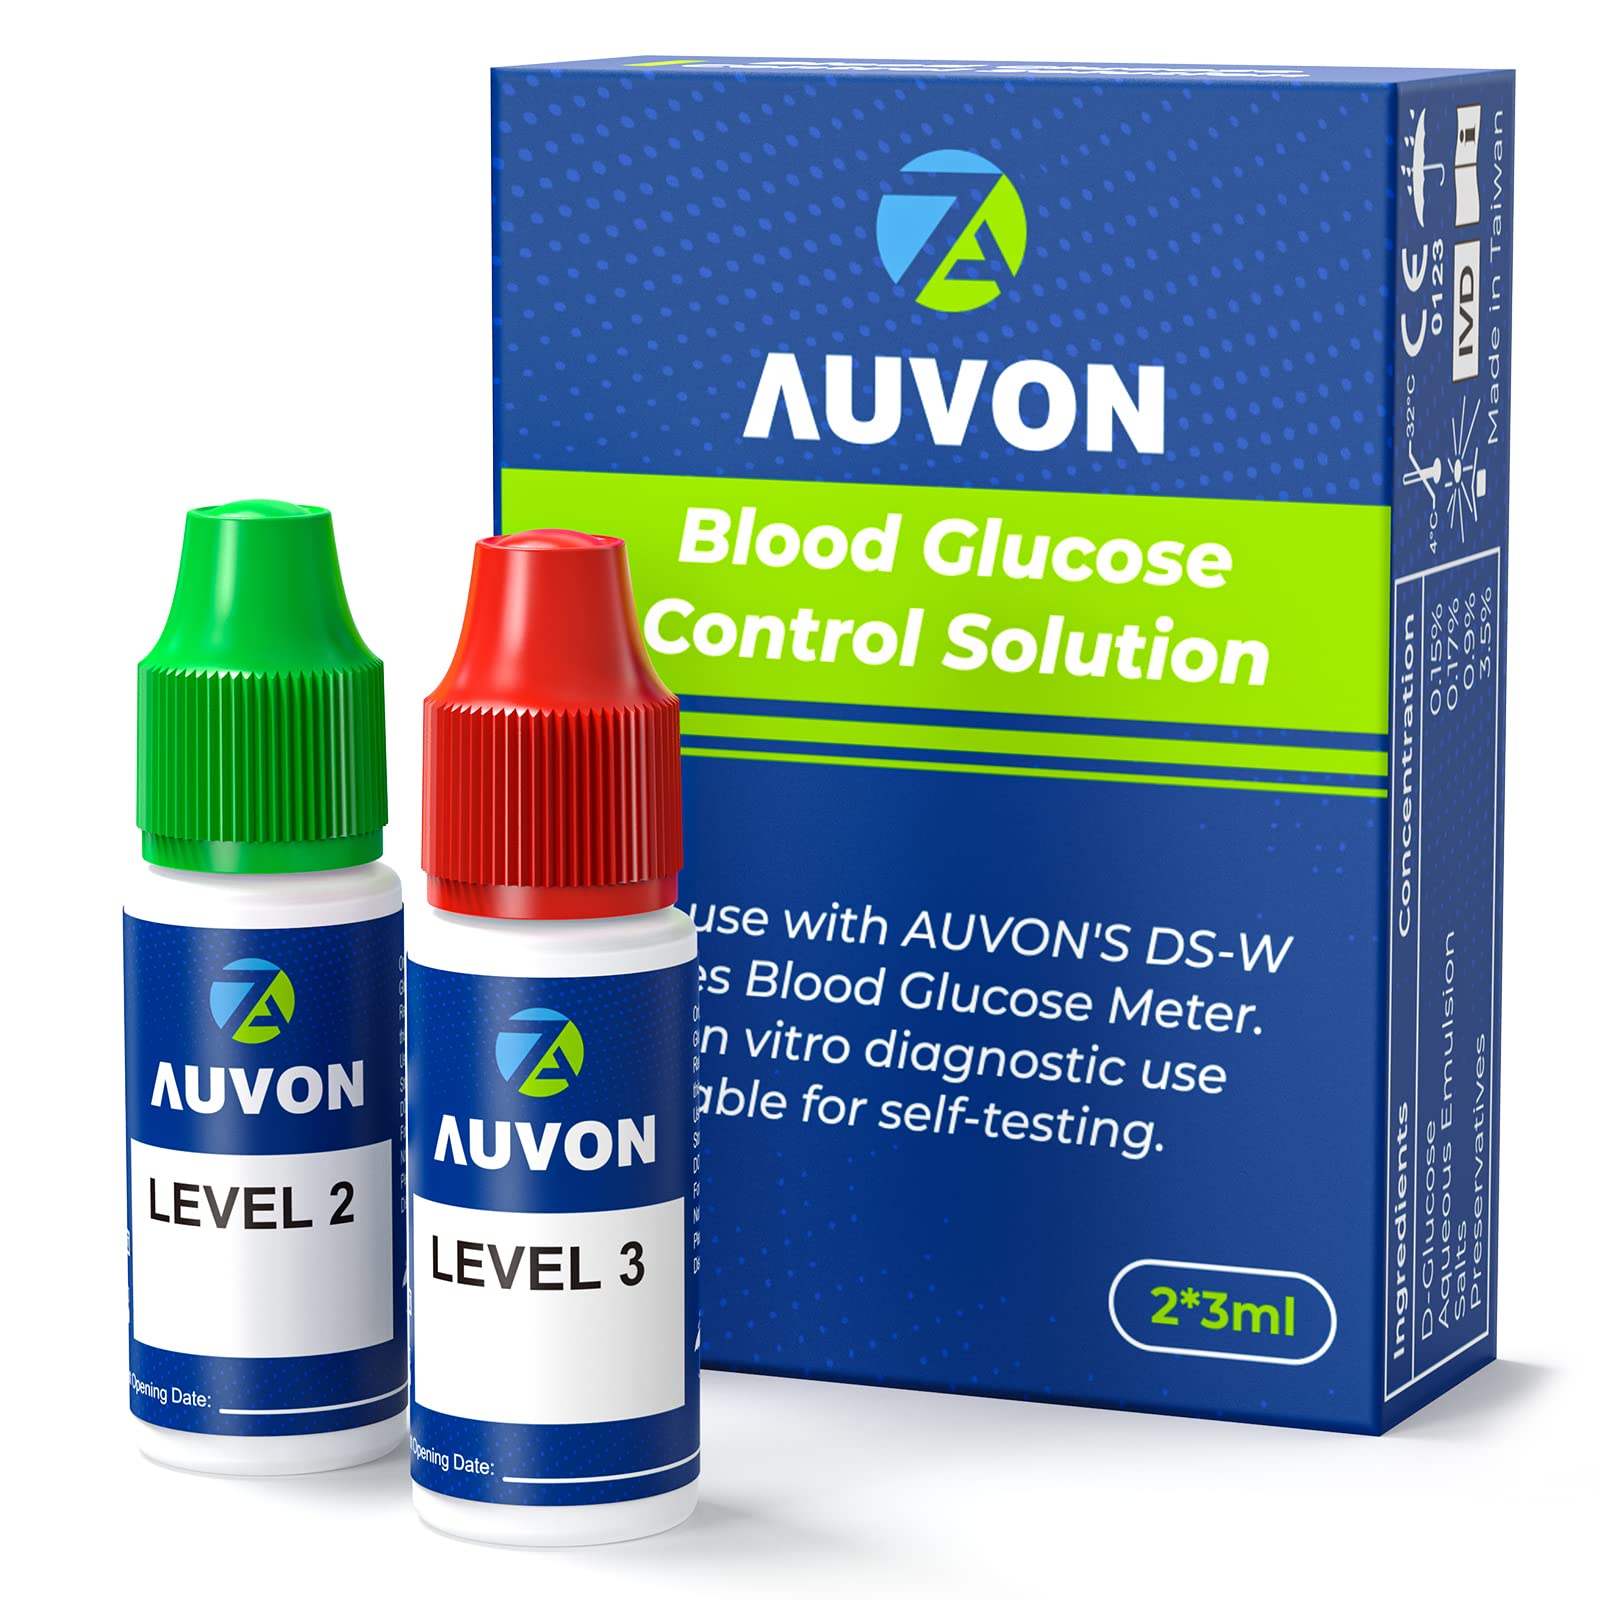 Blood glucose. Control solution